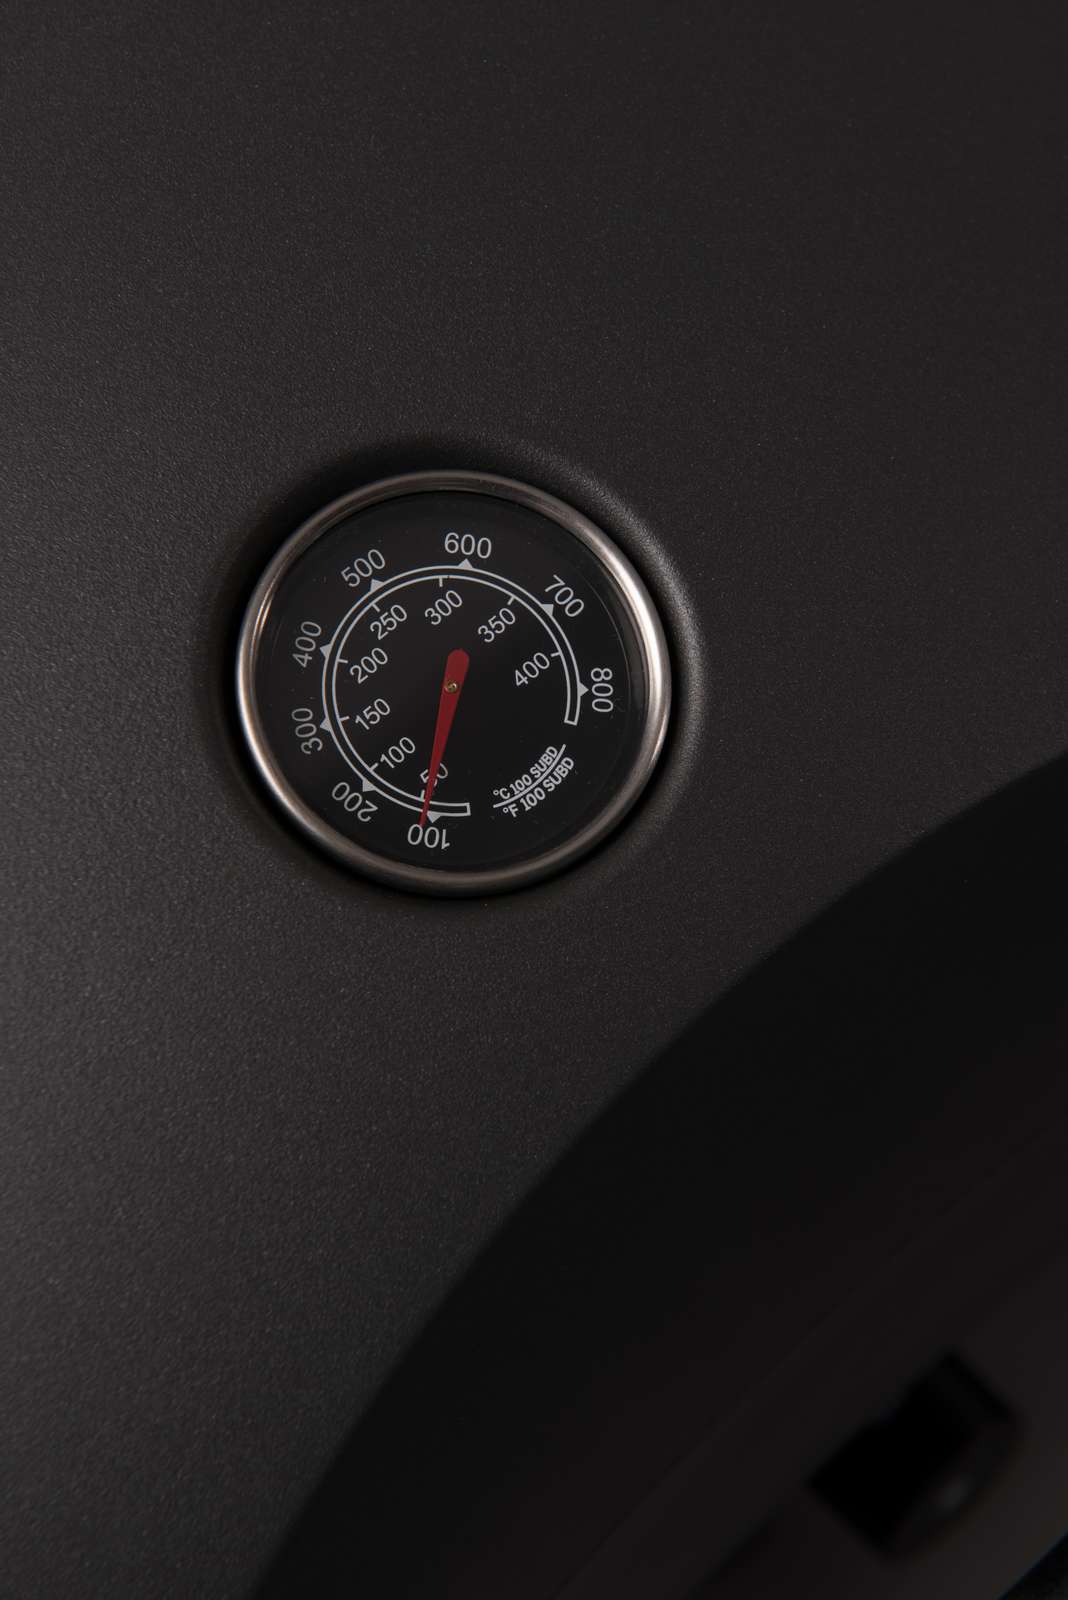 gas forno floor top termometer closeup